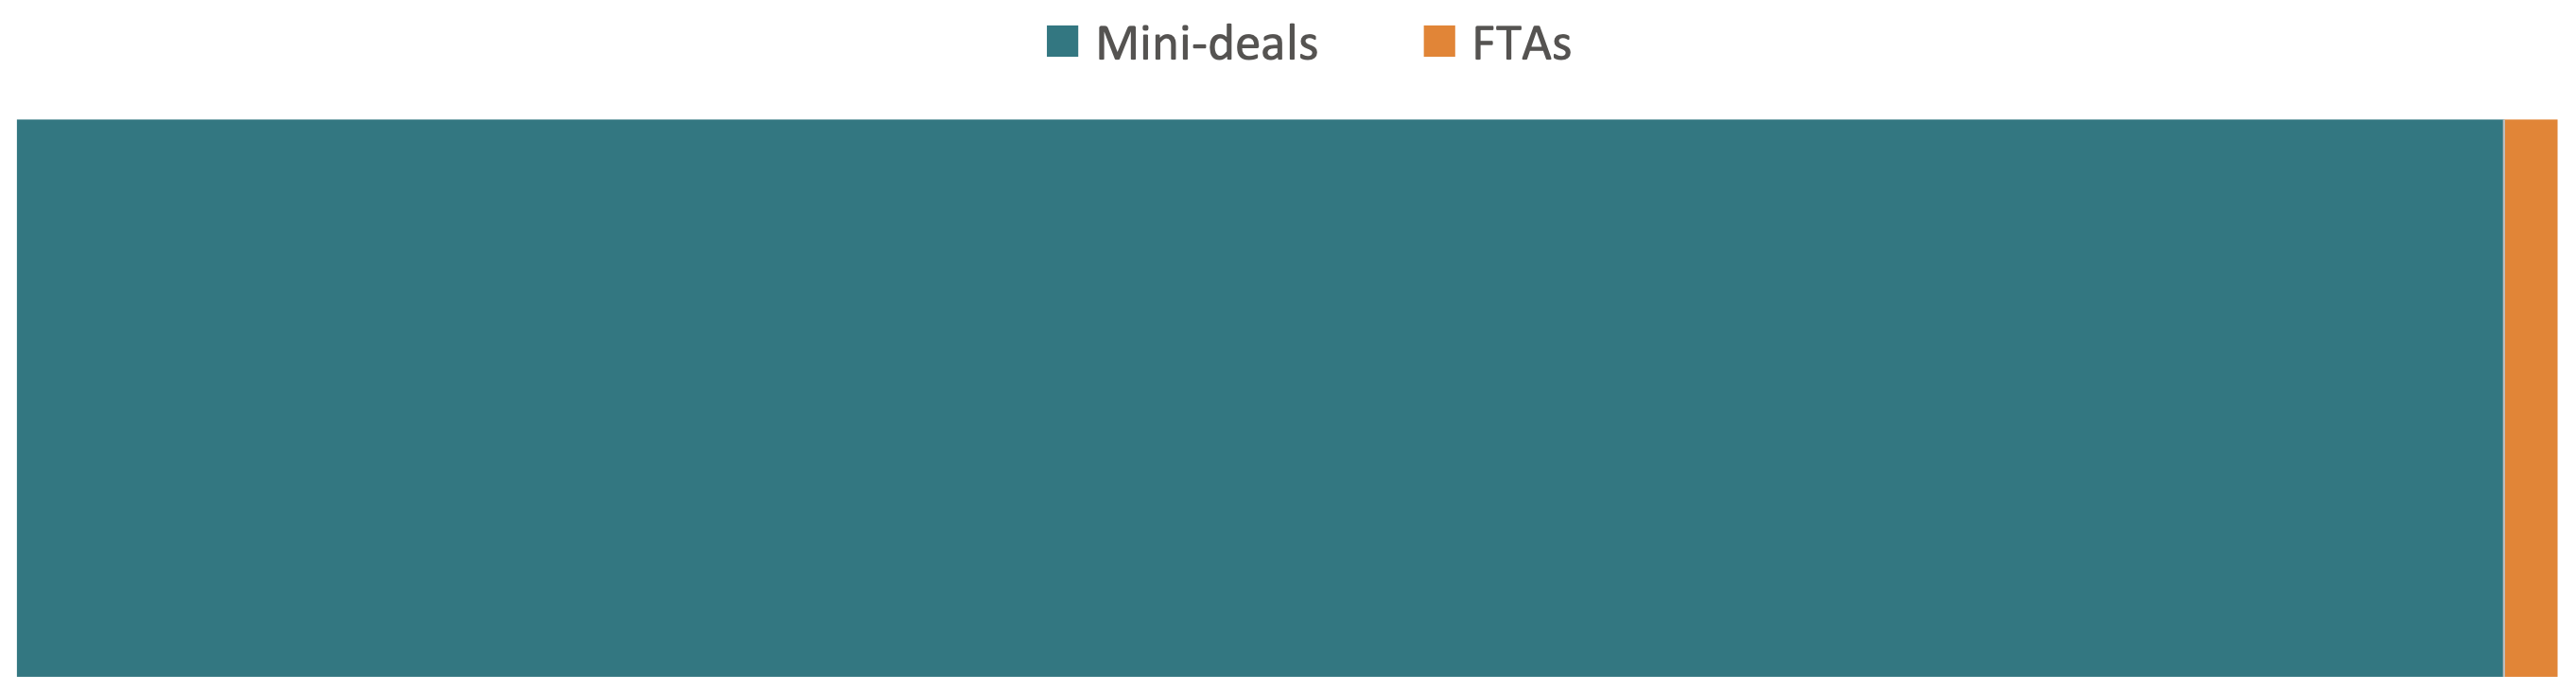 Figure 2 FTAs vs mini-deals: Comparing the numbers